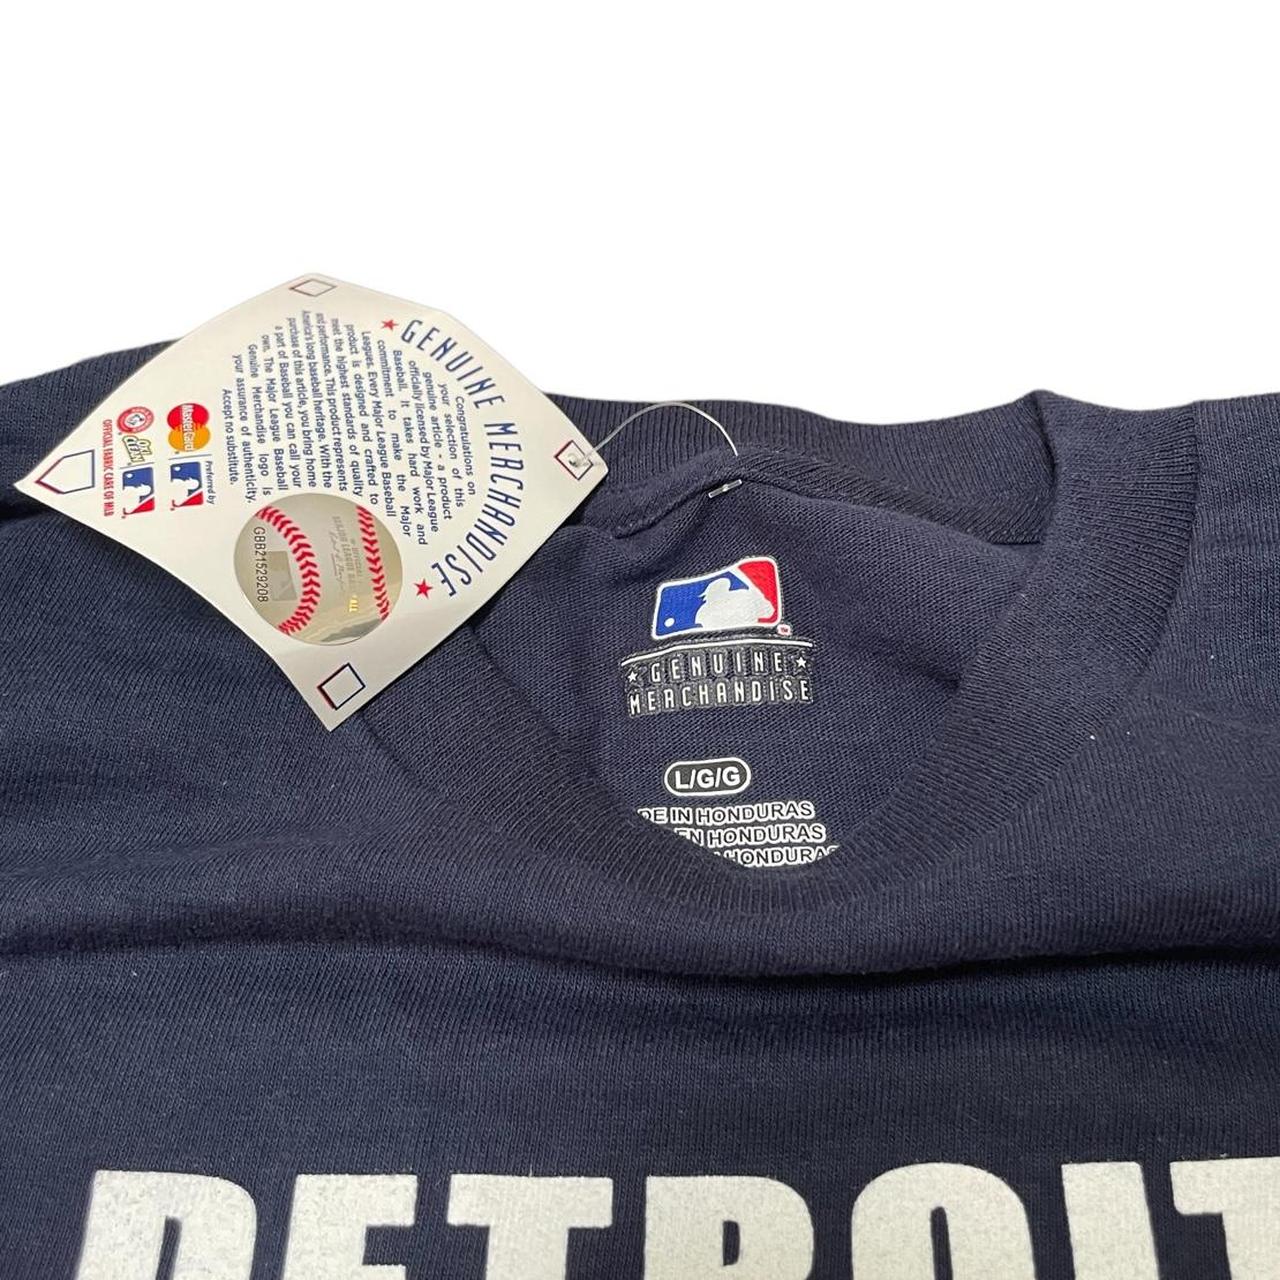 Y2K Detroit Tigers baseball shirt, great condition - Depop